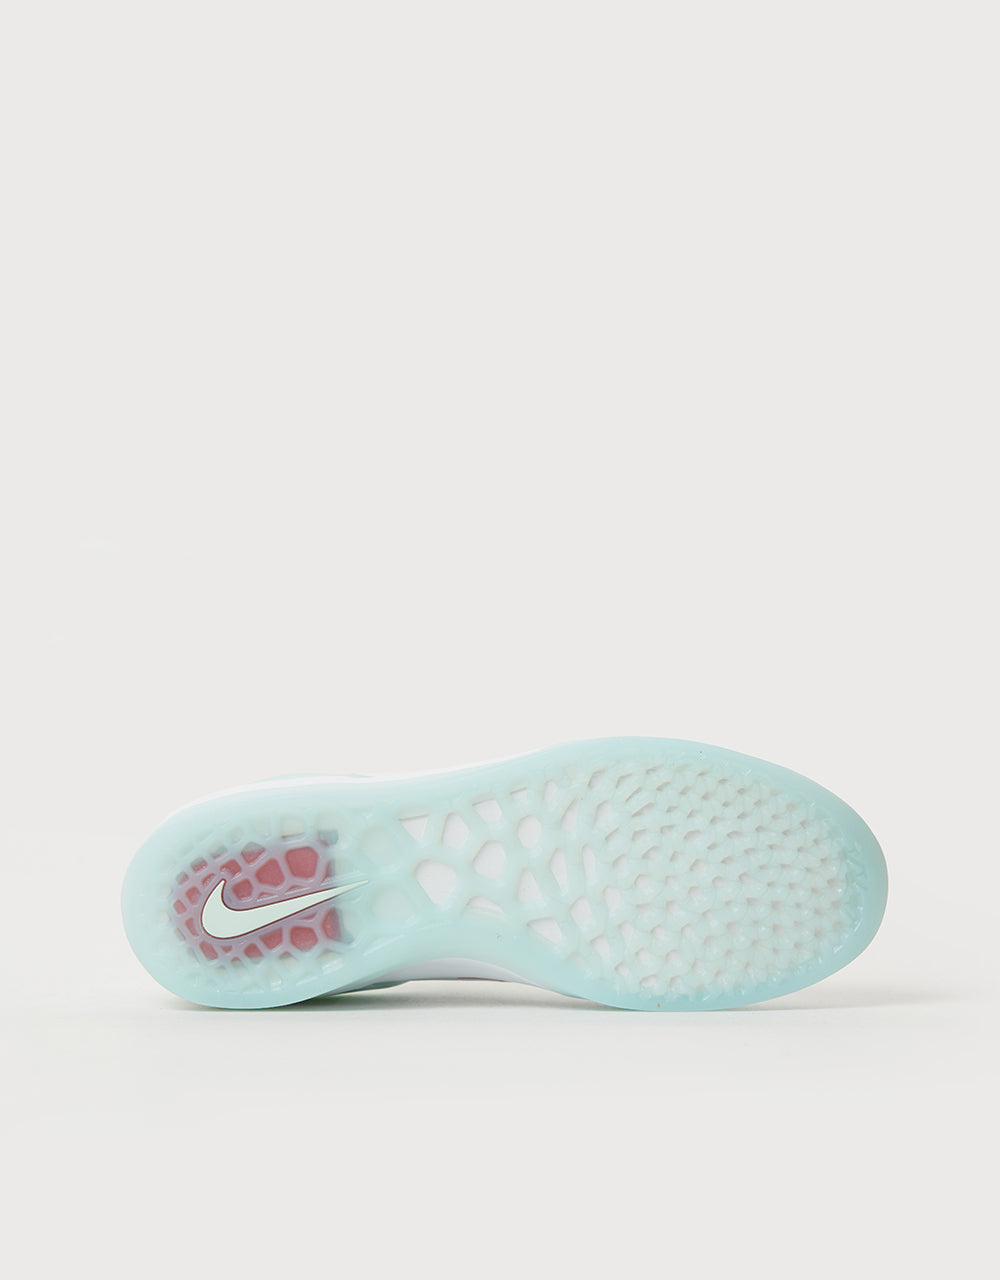 Nike SB Zoom Nyjah 3 Skate Shoes - Skylight/University Red-Skylight-White